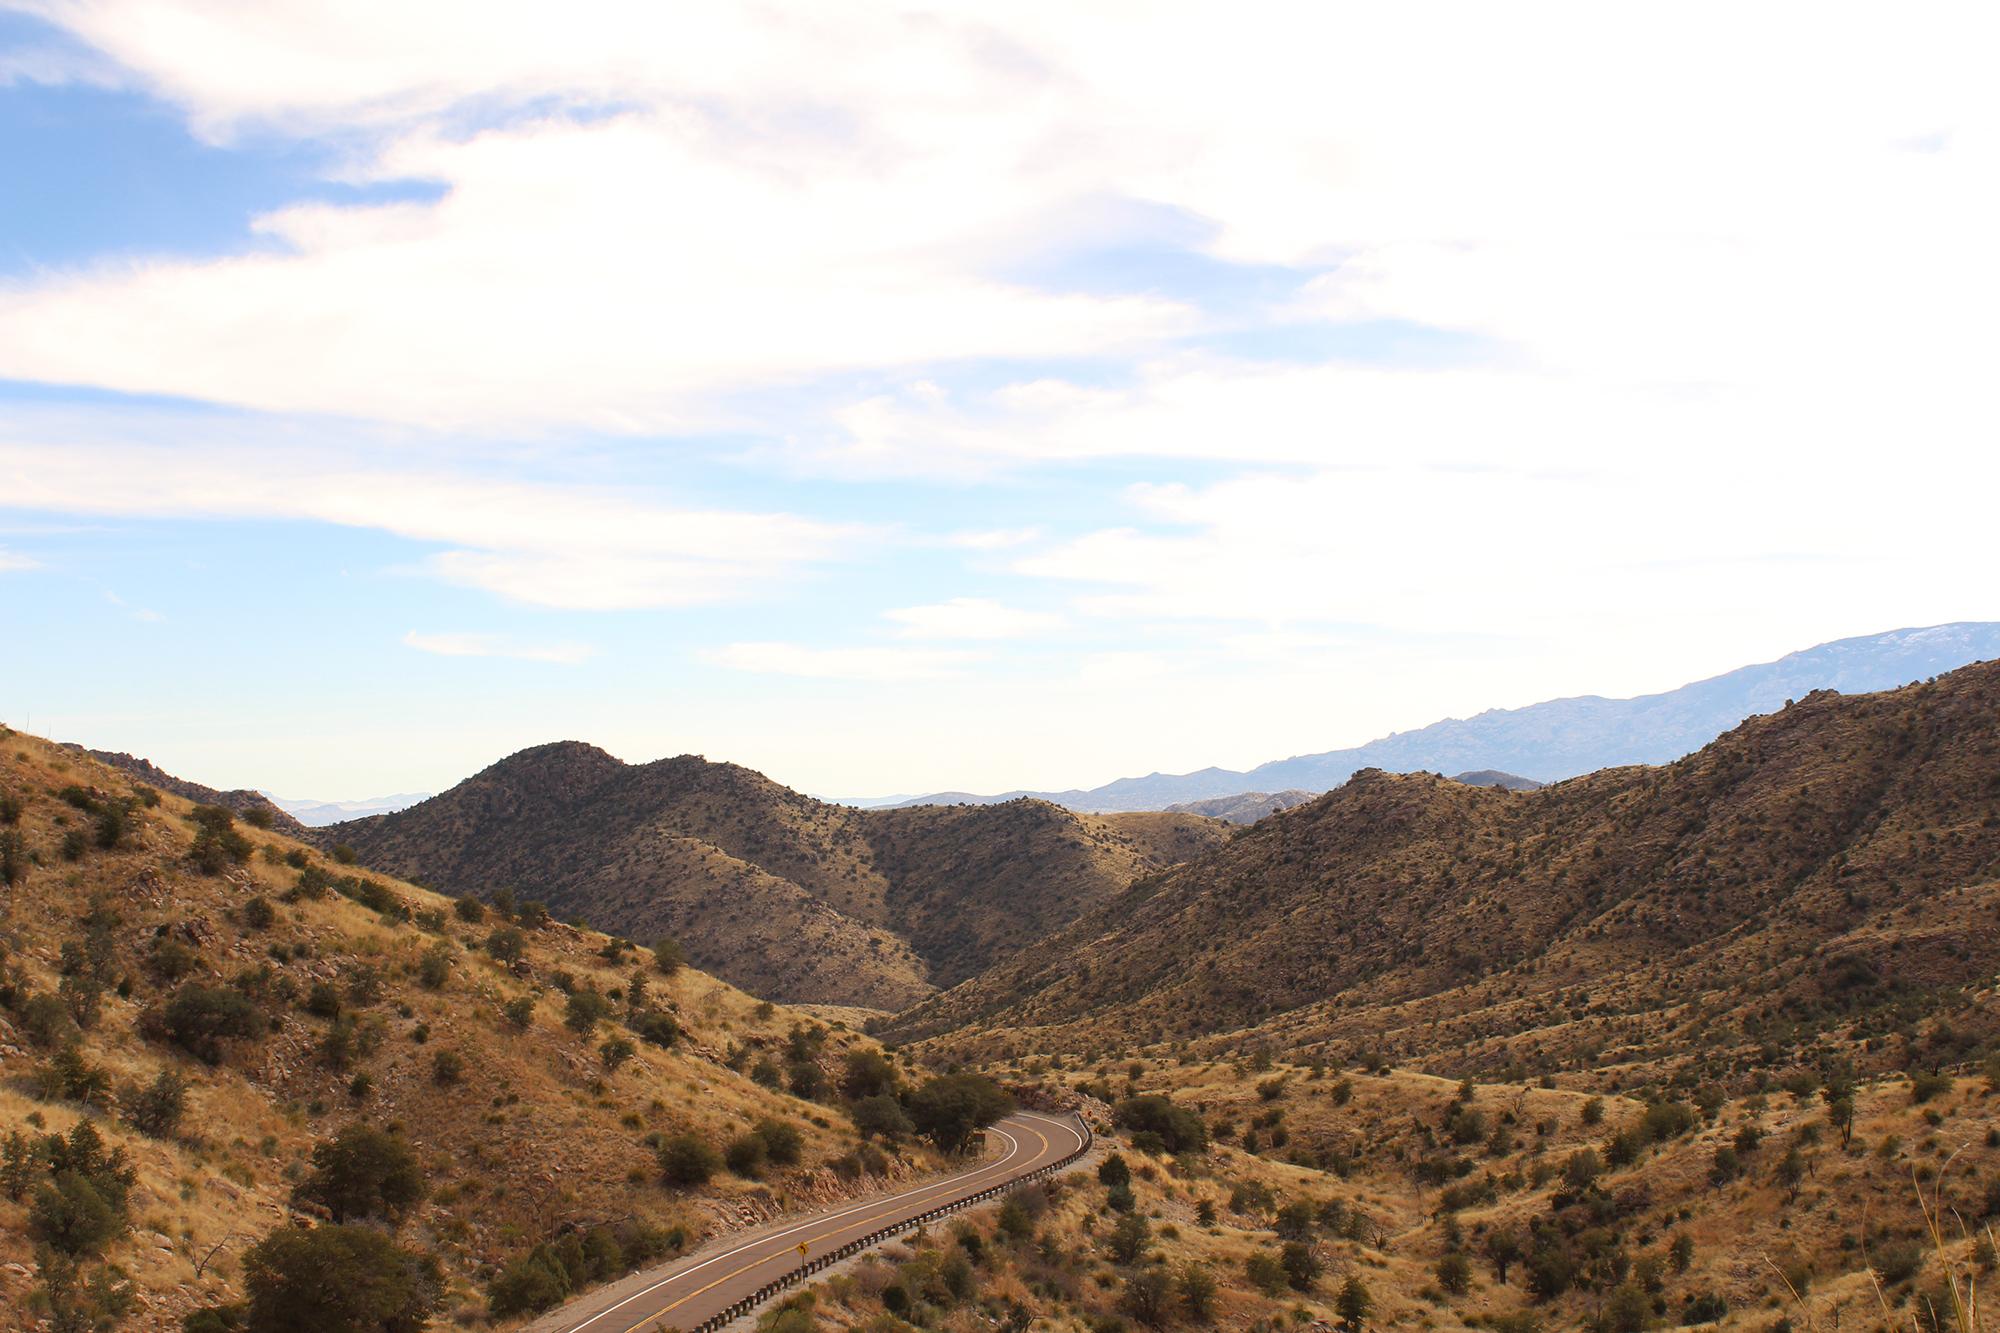 Arizona's Santa Catalina Mountains, where blueberry mason bees thrive (Paul CaraDonna / Northwestern University)